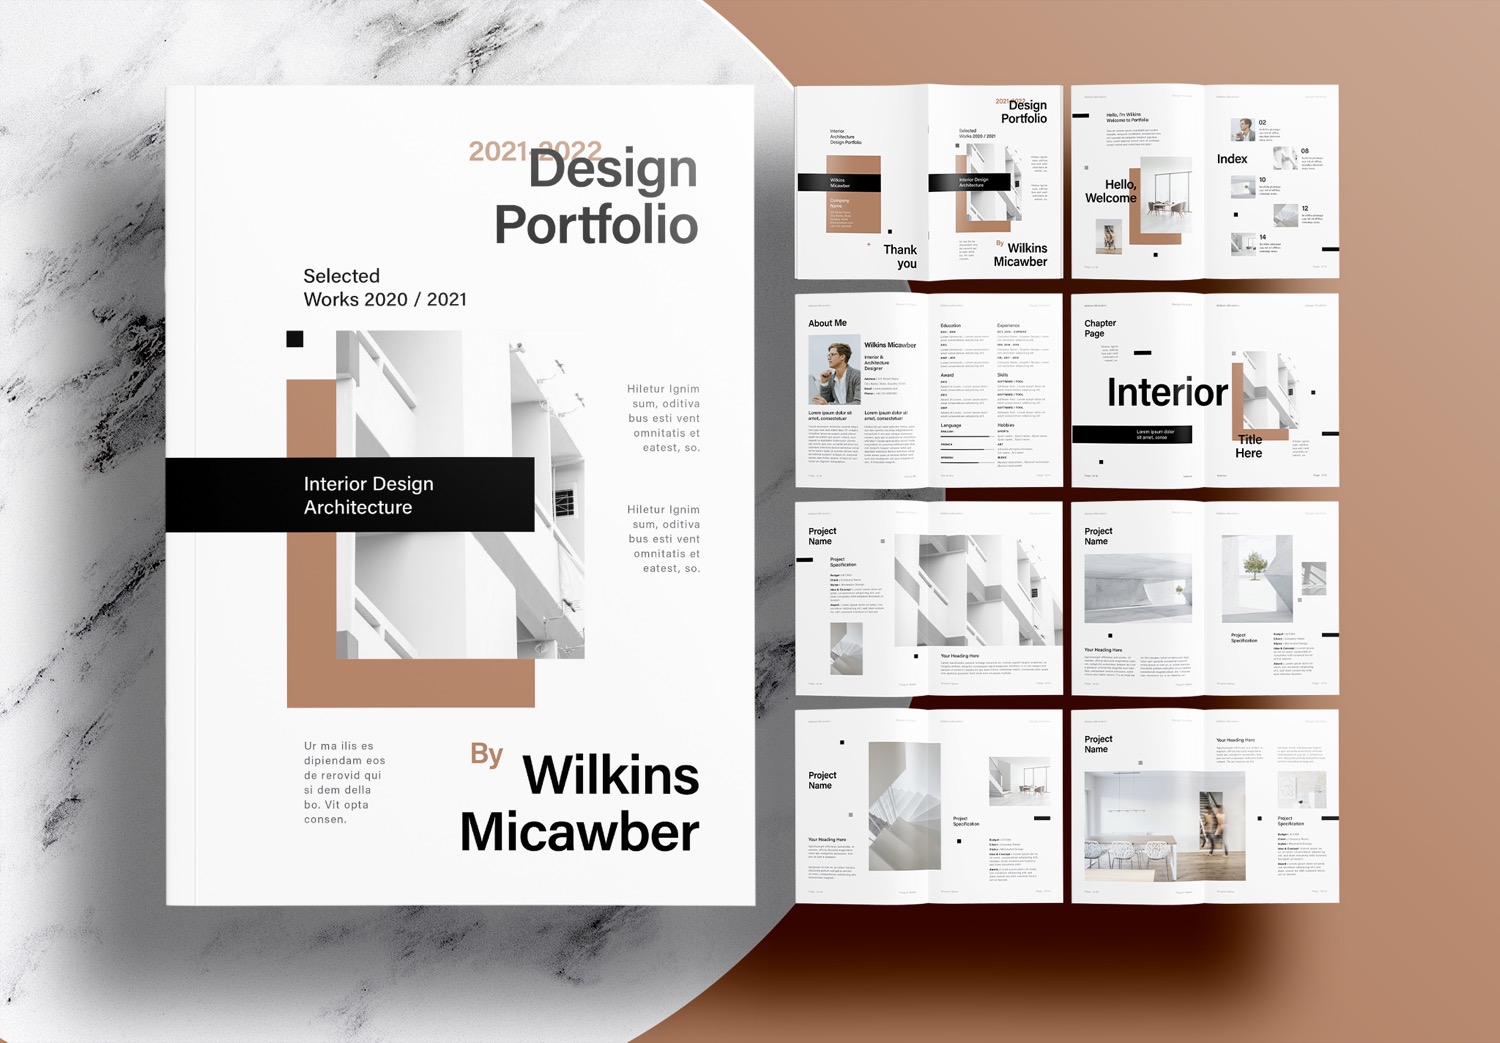 Interior Design Portfolio Template Indesign | Cabinets Matttroy